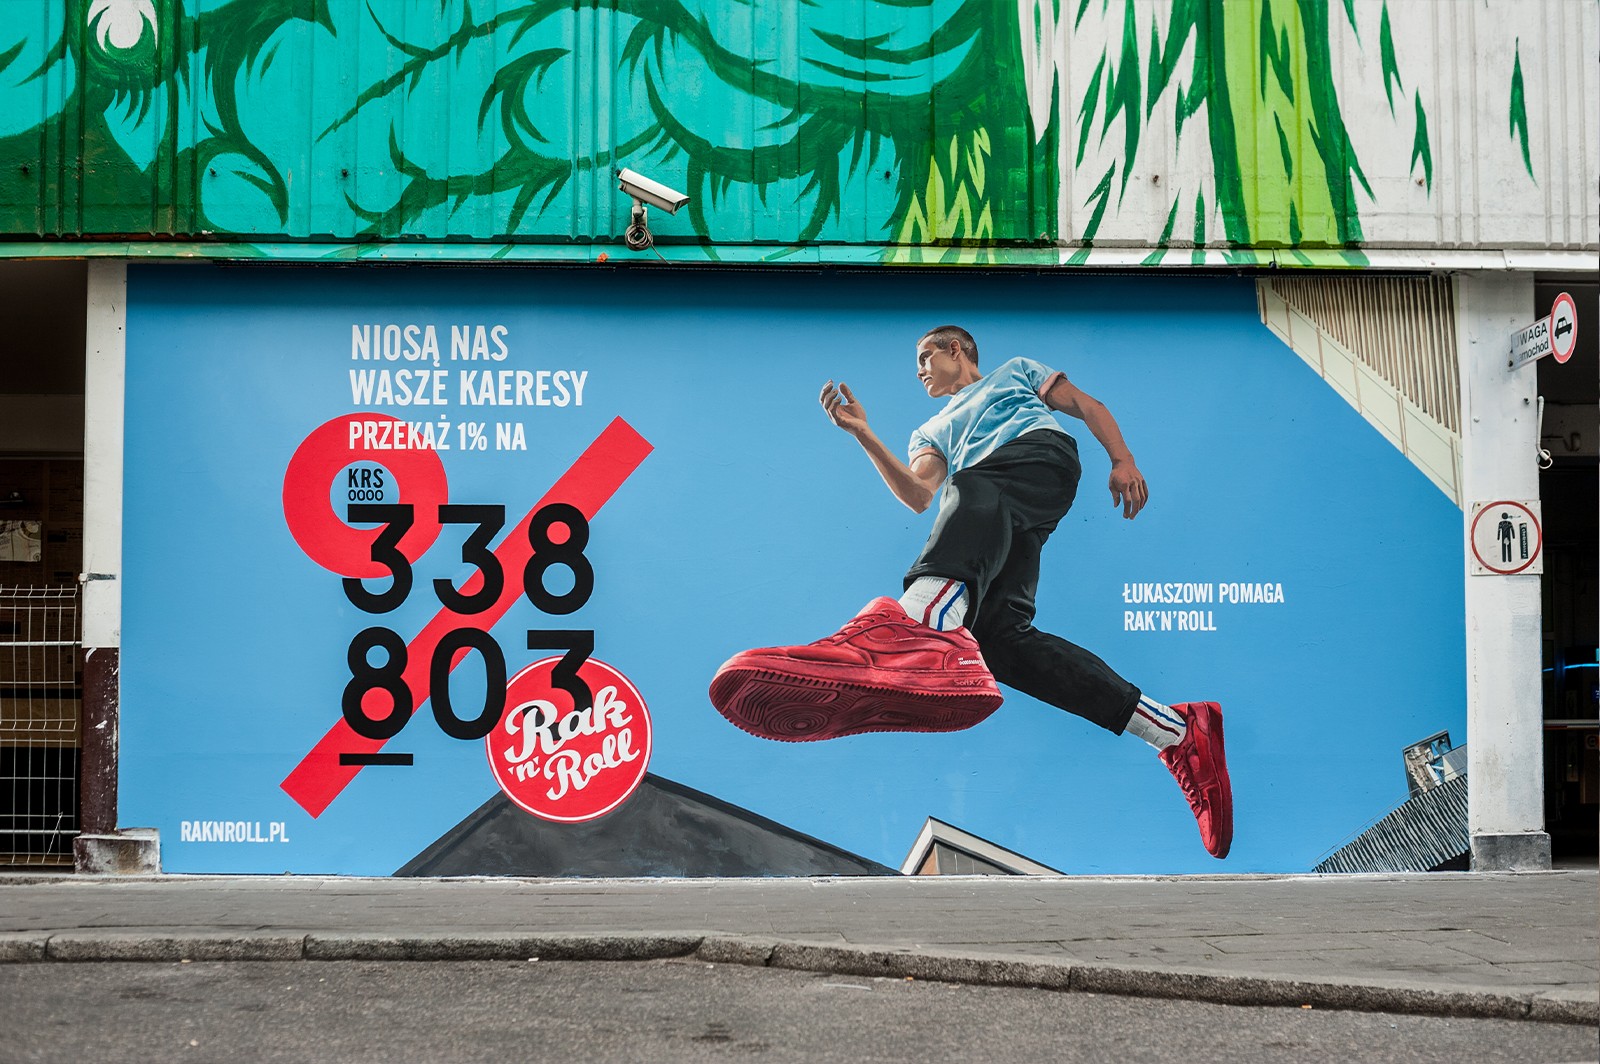 Artistic mural for in Warsaw Rak'n'Roll foudation | NIOSĄ NAS WASZE KAERESY! | Portfolio